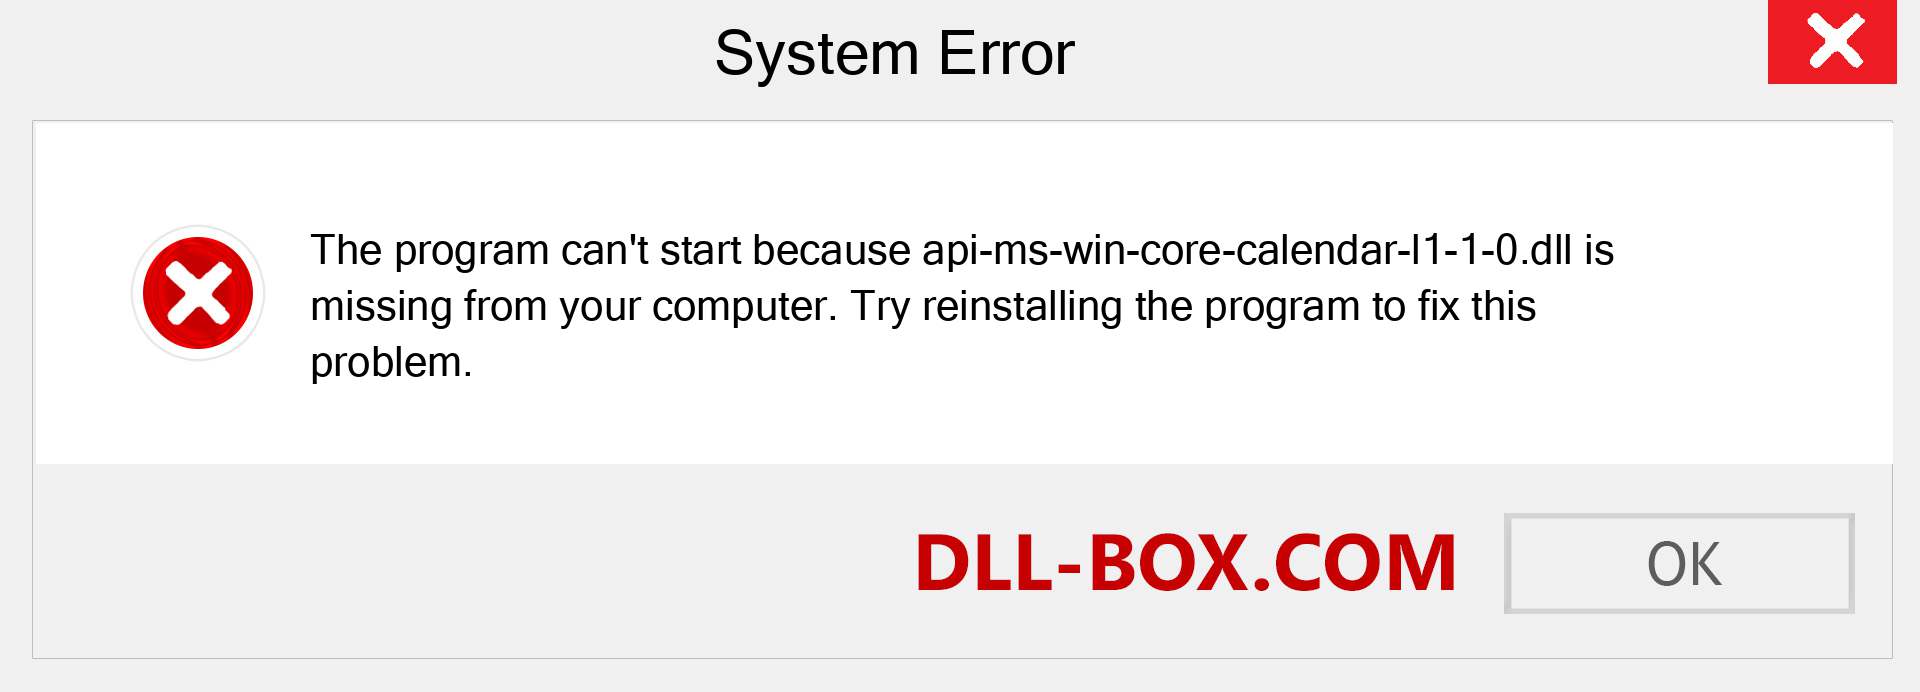  api-ms-win-core-calendar-l1-1-0.dll file is missing?. Download for Windows 7, 8, 10 - Fix  api-ms-win-core-calendar-l1-1-0 dll Missing Error on Windows, photos, images